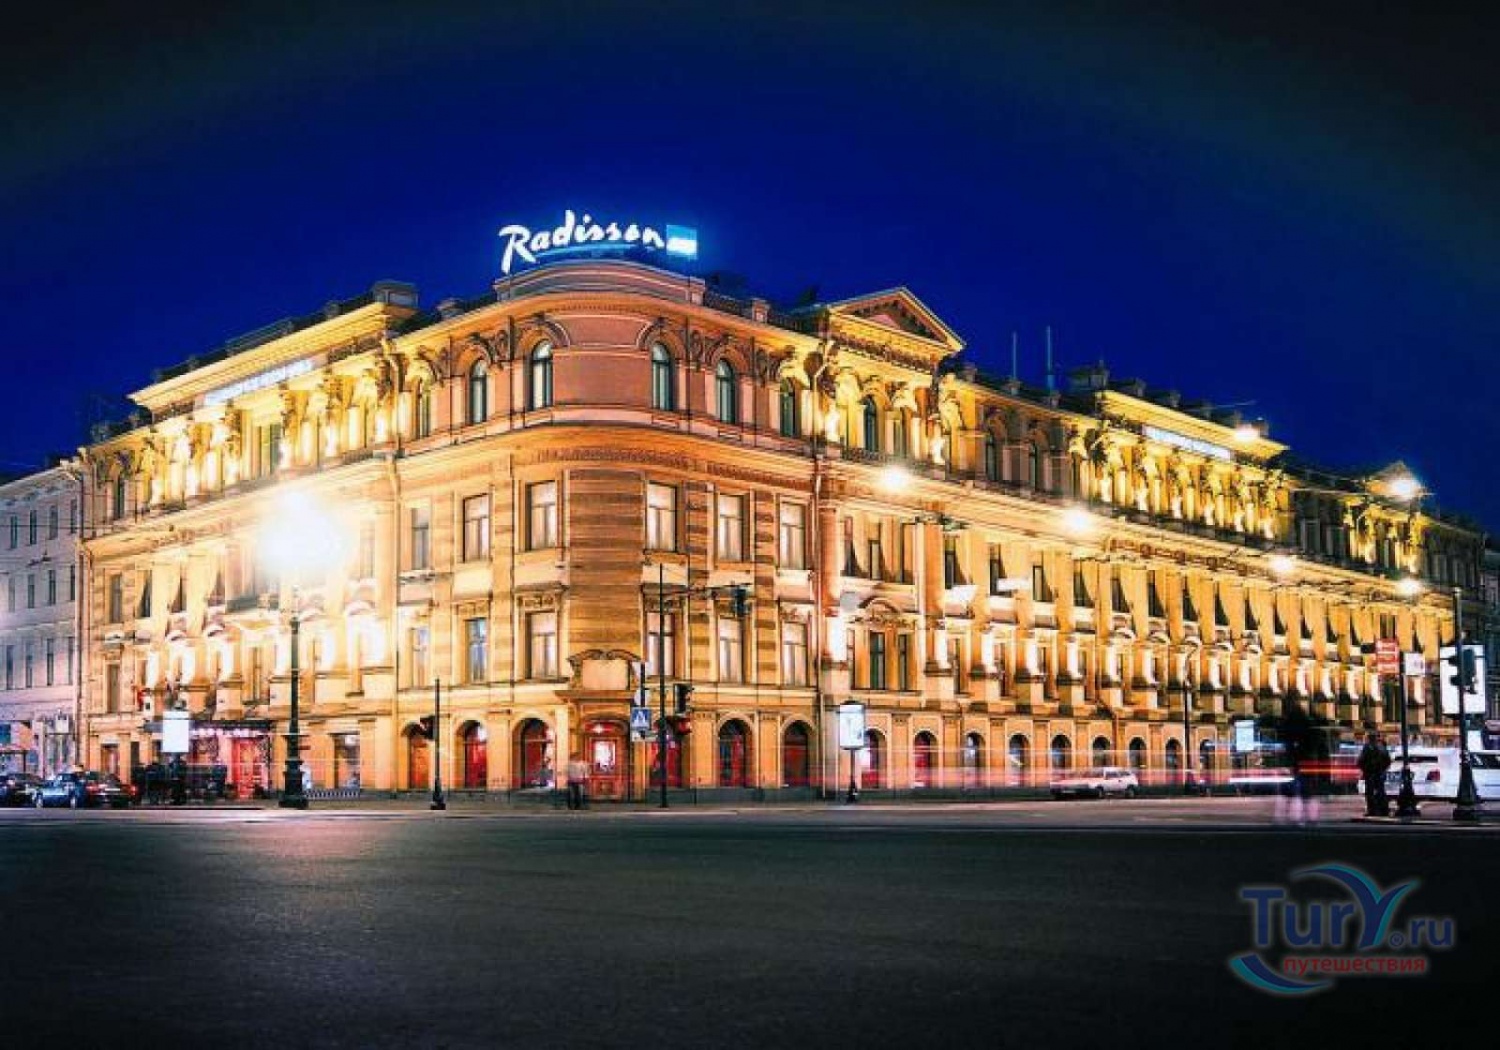 Saint petersburg nevsky royal hotel. Рэдиссон Роял отель Санкт-Петербург. Рэдиссон Питер гостиница.